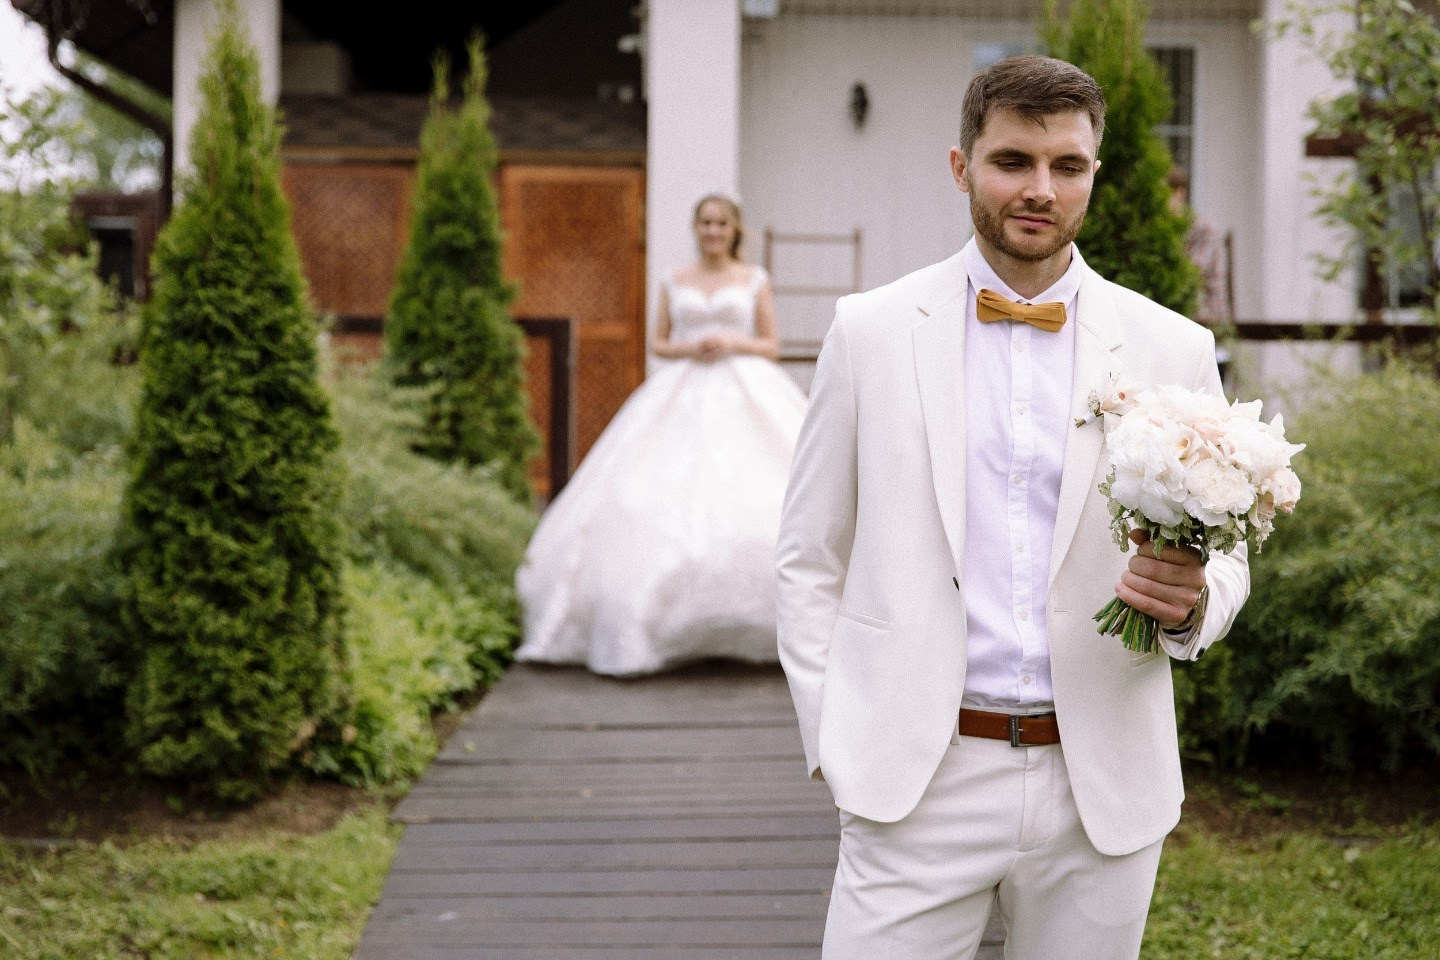 White grace: стильная свадьба в доме у озера